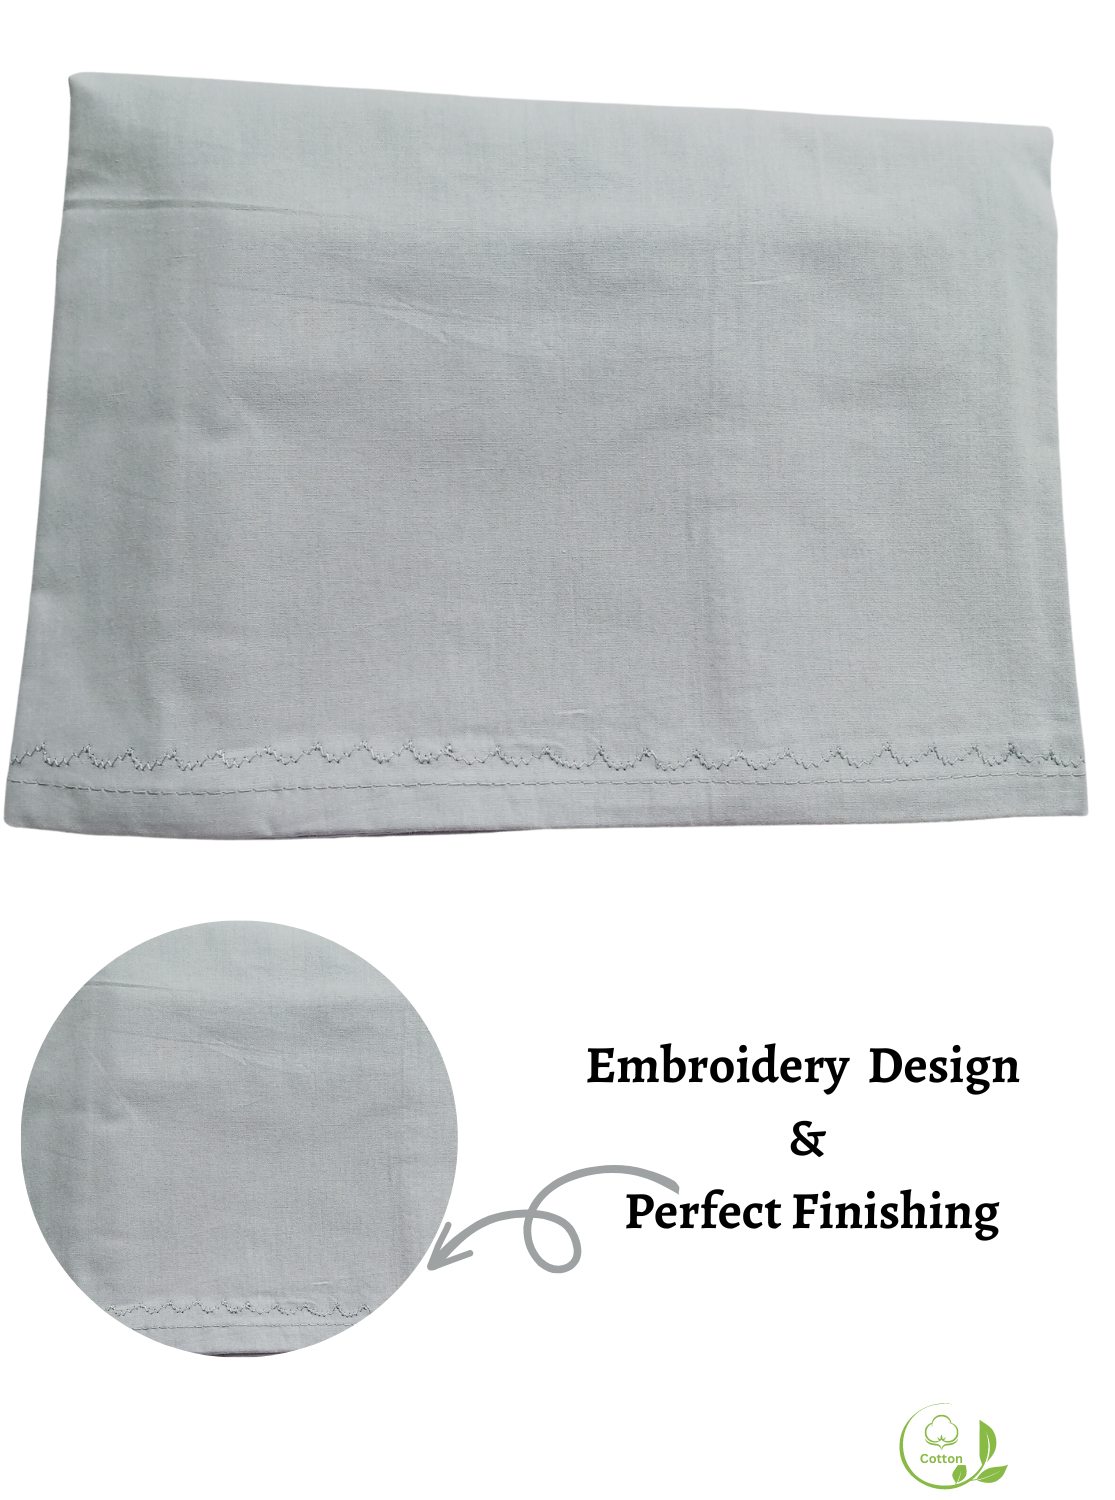 MANGAI Premium Embroidery Superior Cotton Petticoats - 7 Part Multiple Color's Petticoats